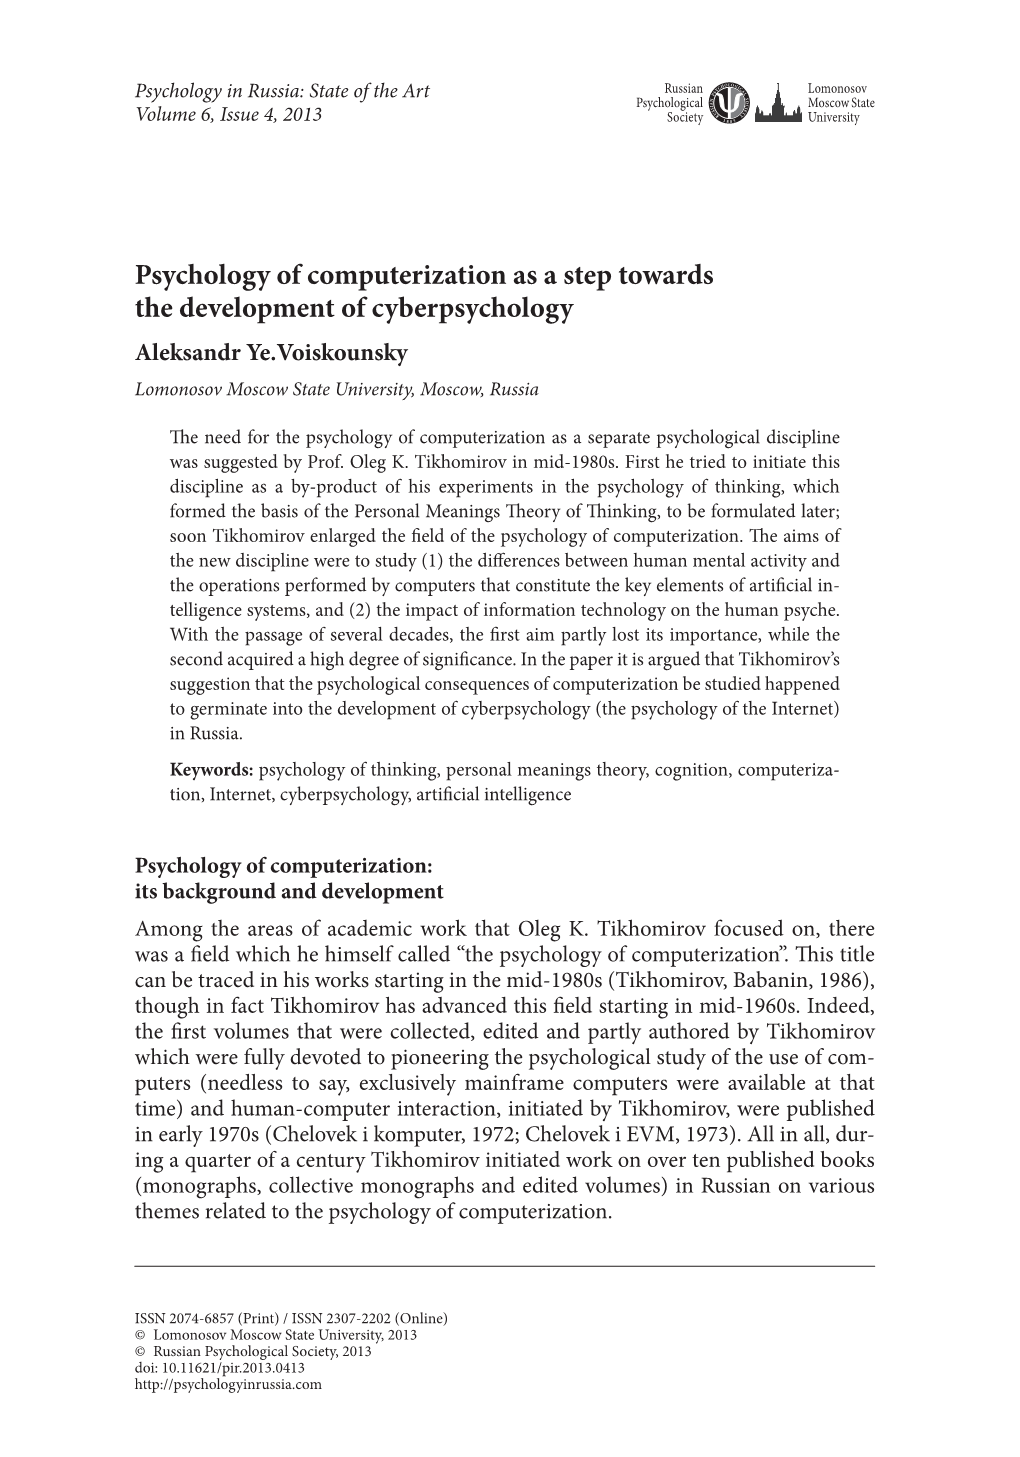 Psychology of Computerization As a Step Towards the Development of Cyberpsychology Aleksandr Ye.Voiskounsky Lomonosov Moscow State University, Moscow, Russia